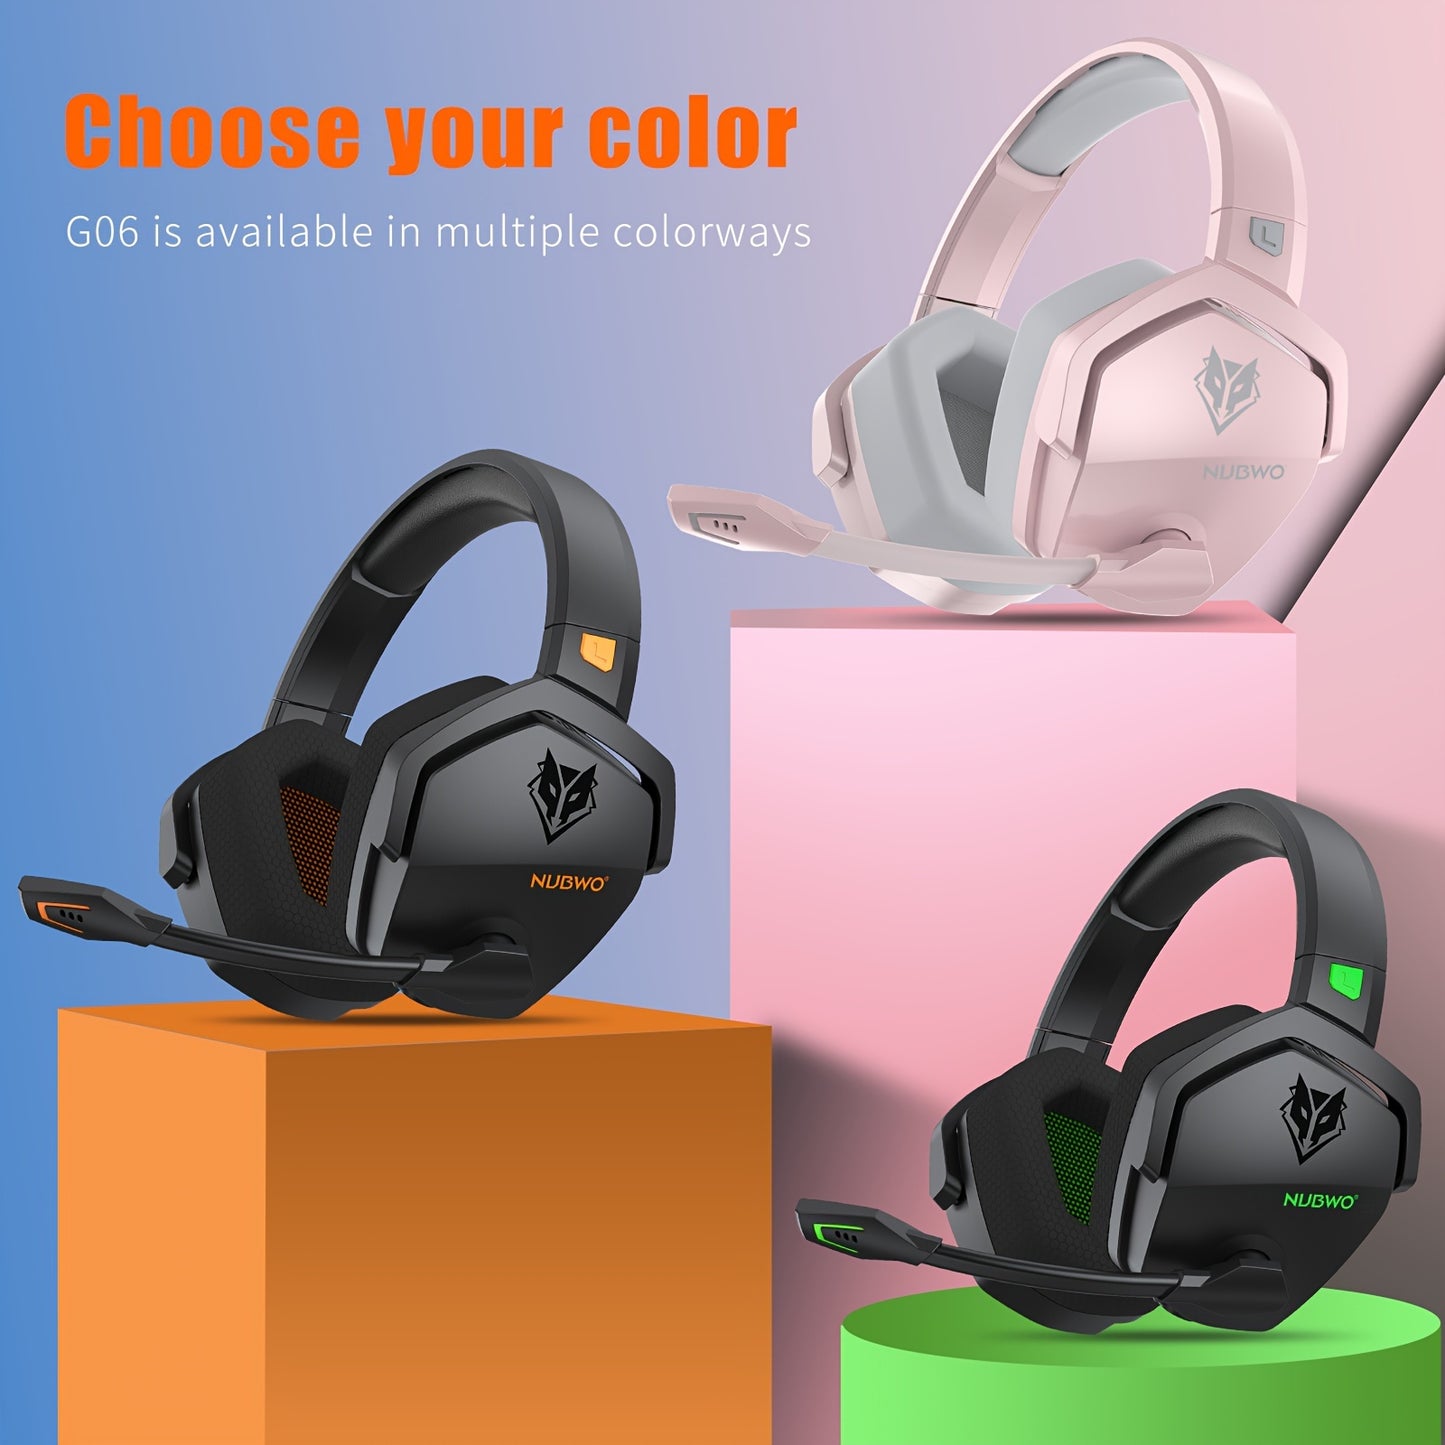 NUBWO G06 Headset Wireless USB Noise Cancelling Gaming Headset, Wireless Gaming Headset With Microphone, Gamer Headphones